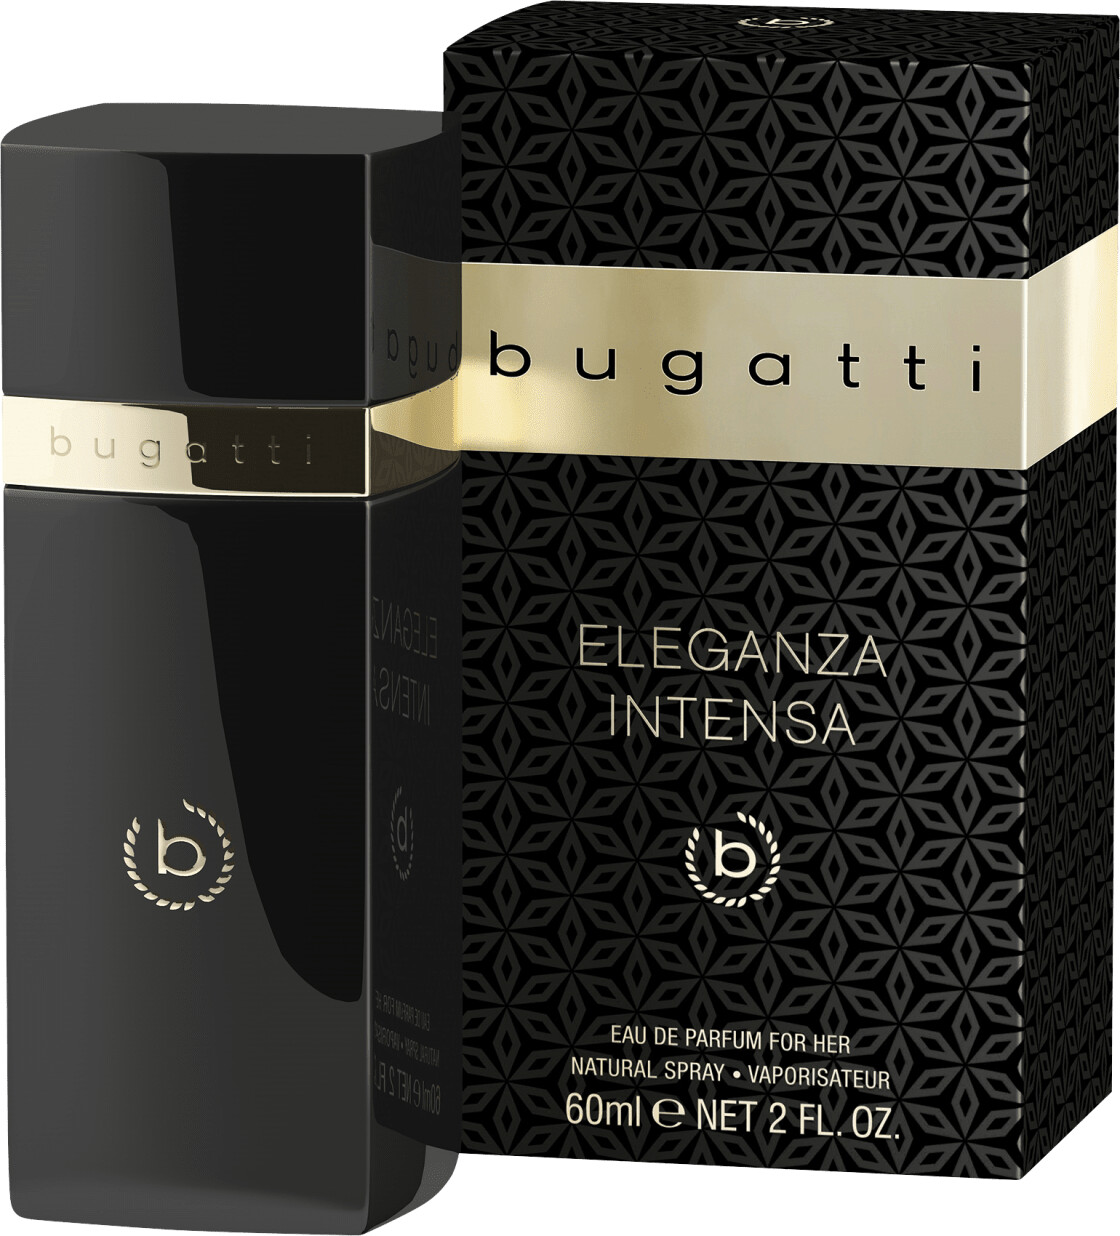 Bugatti Eleganza Intensa Eau de Parfum (60ml) ab 17,95 € | Preisvergleich  bei